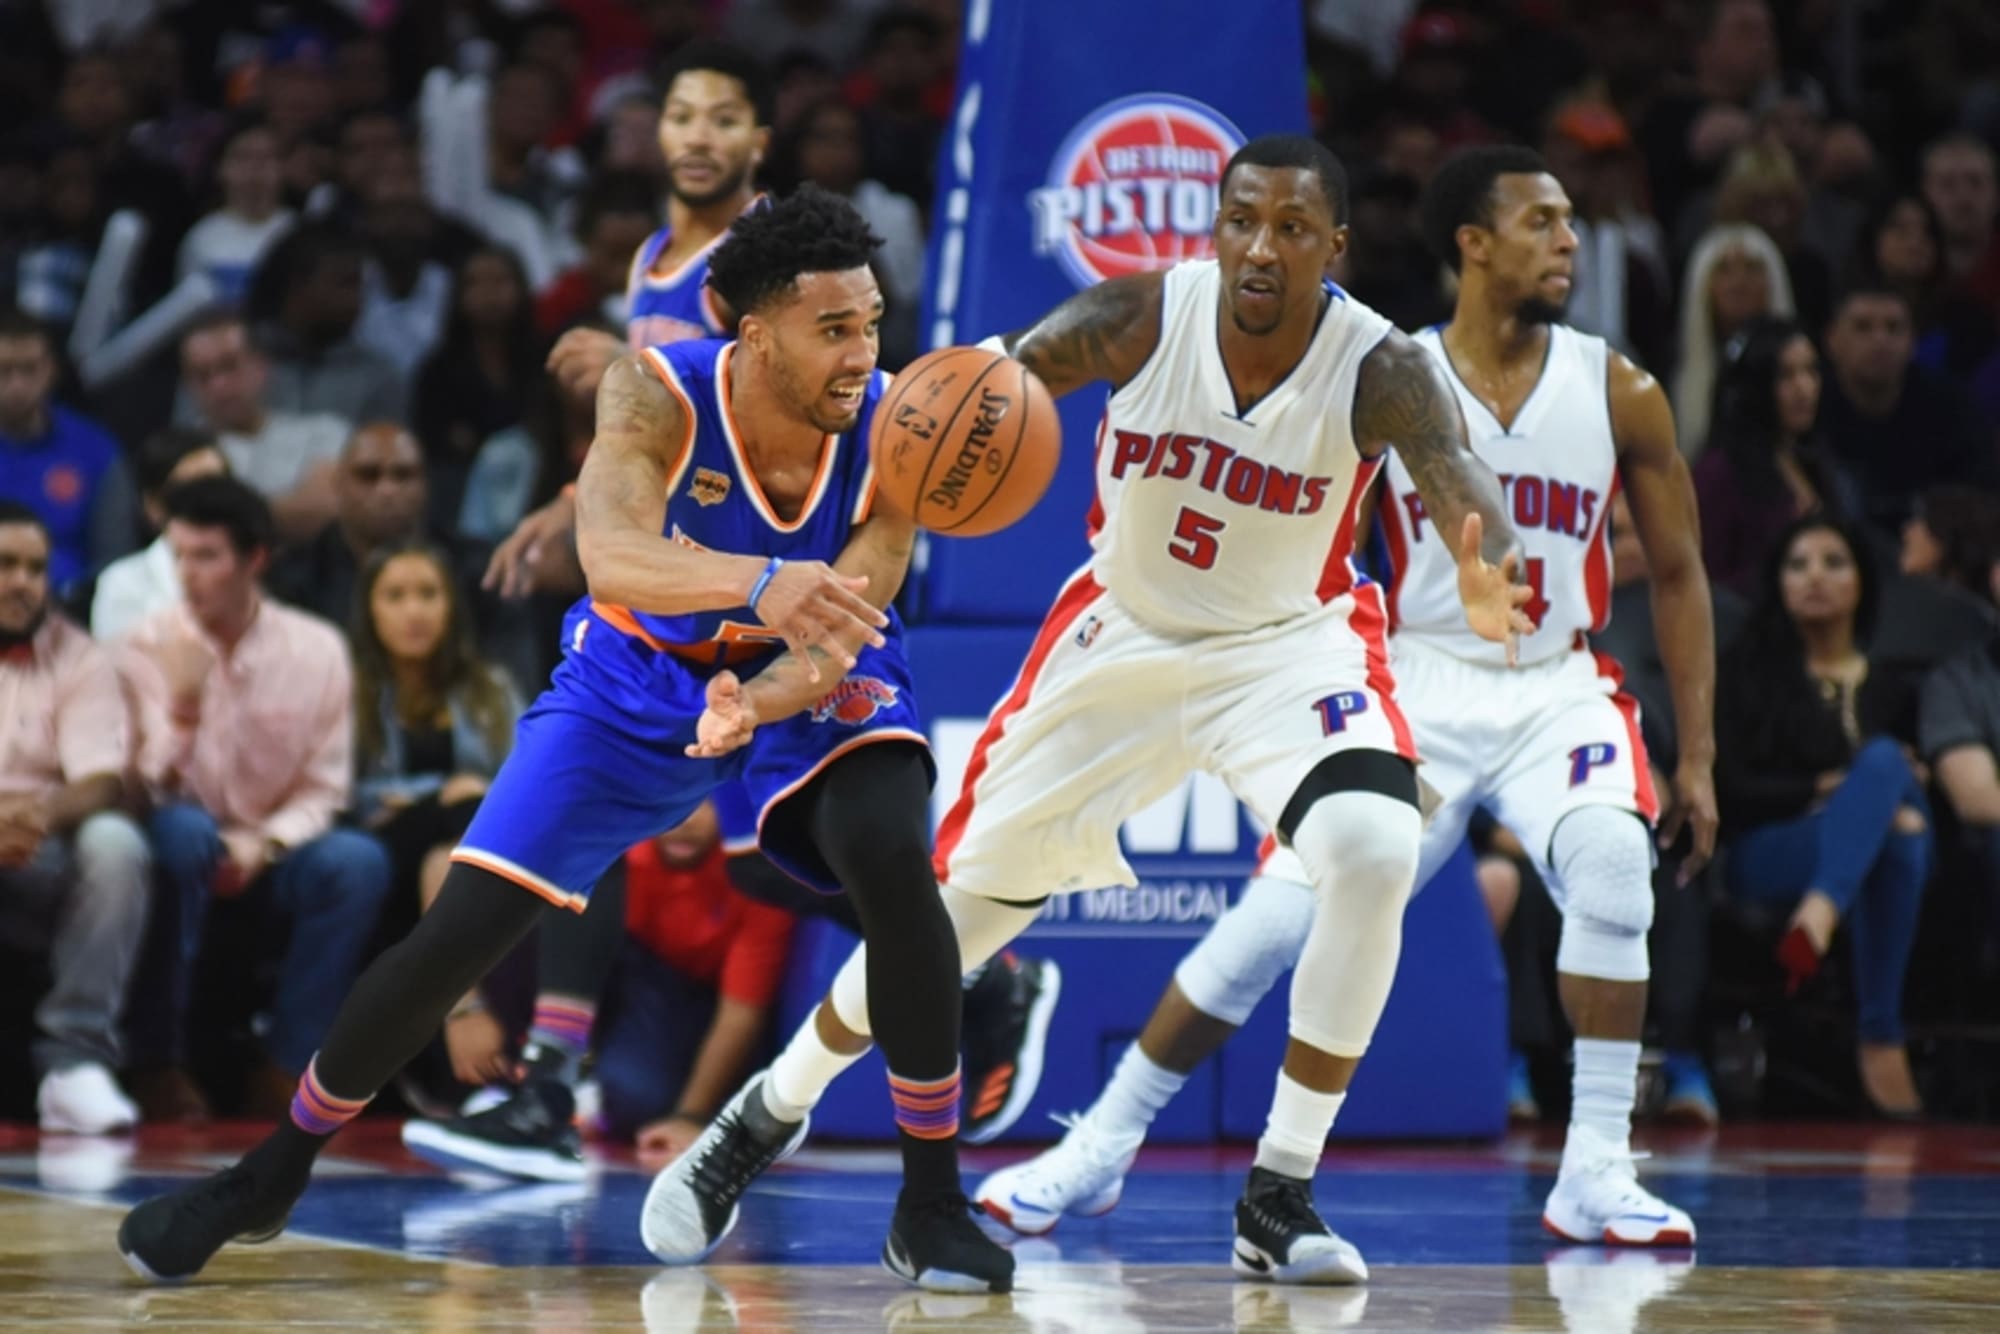 Detroit Pistons vs New York Knicks Live Stream Watch NBA Online